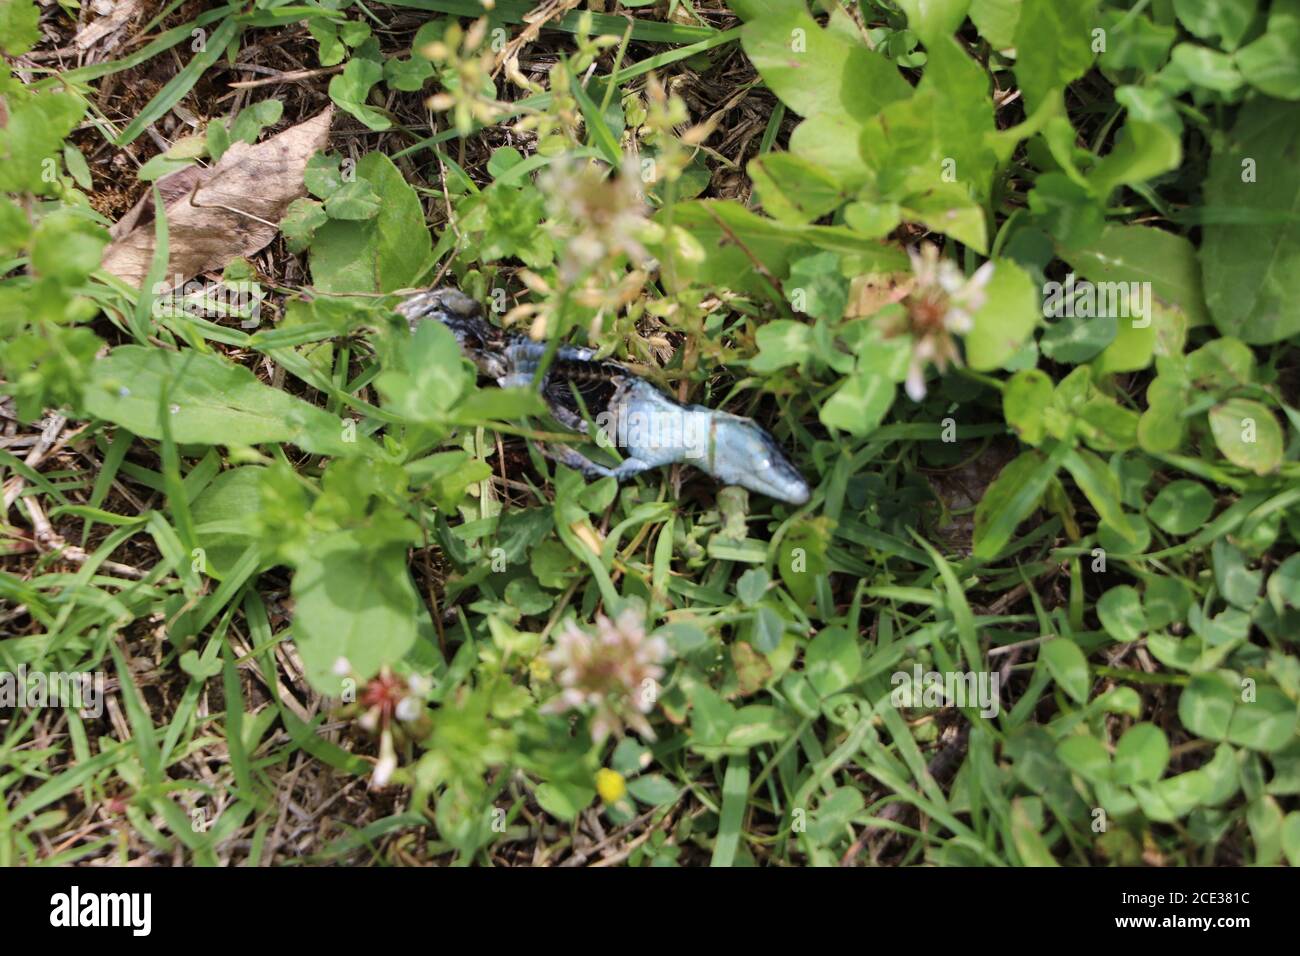 dead lizard body decomposing in the grass Stock Photo